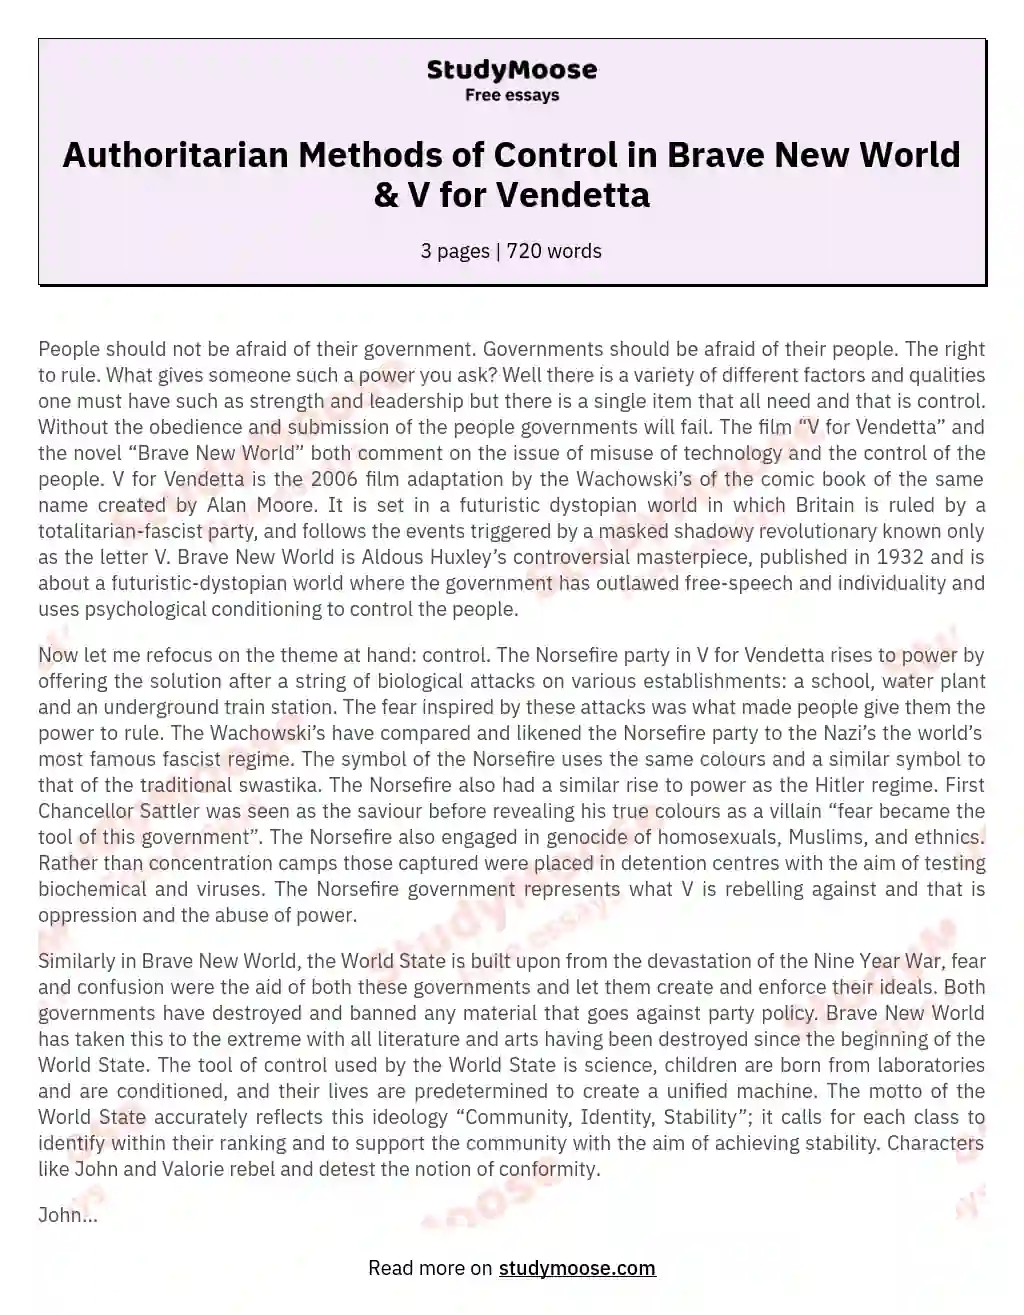 Authoritarian Methods of Control in Brave New World & V for Vendetta